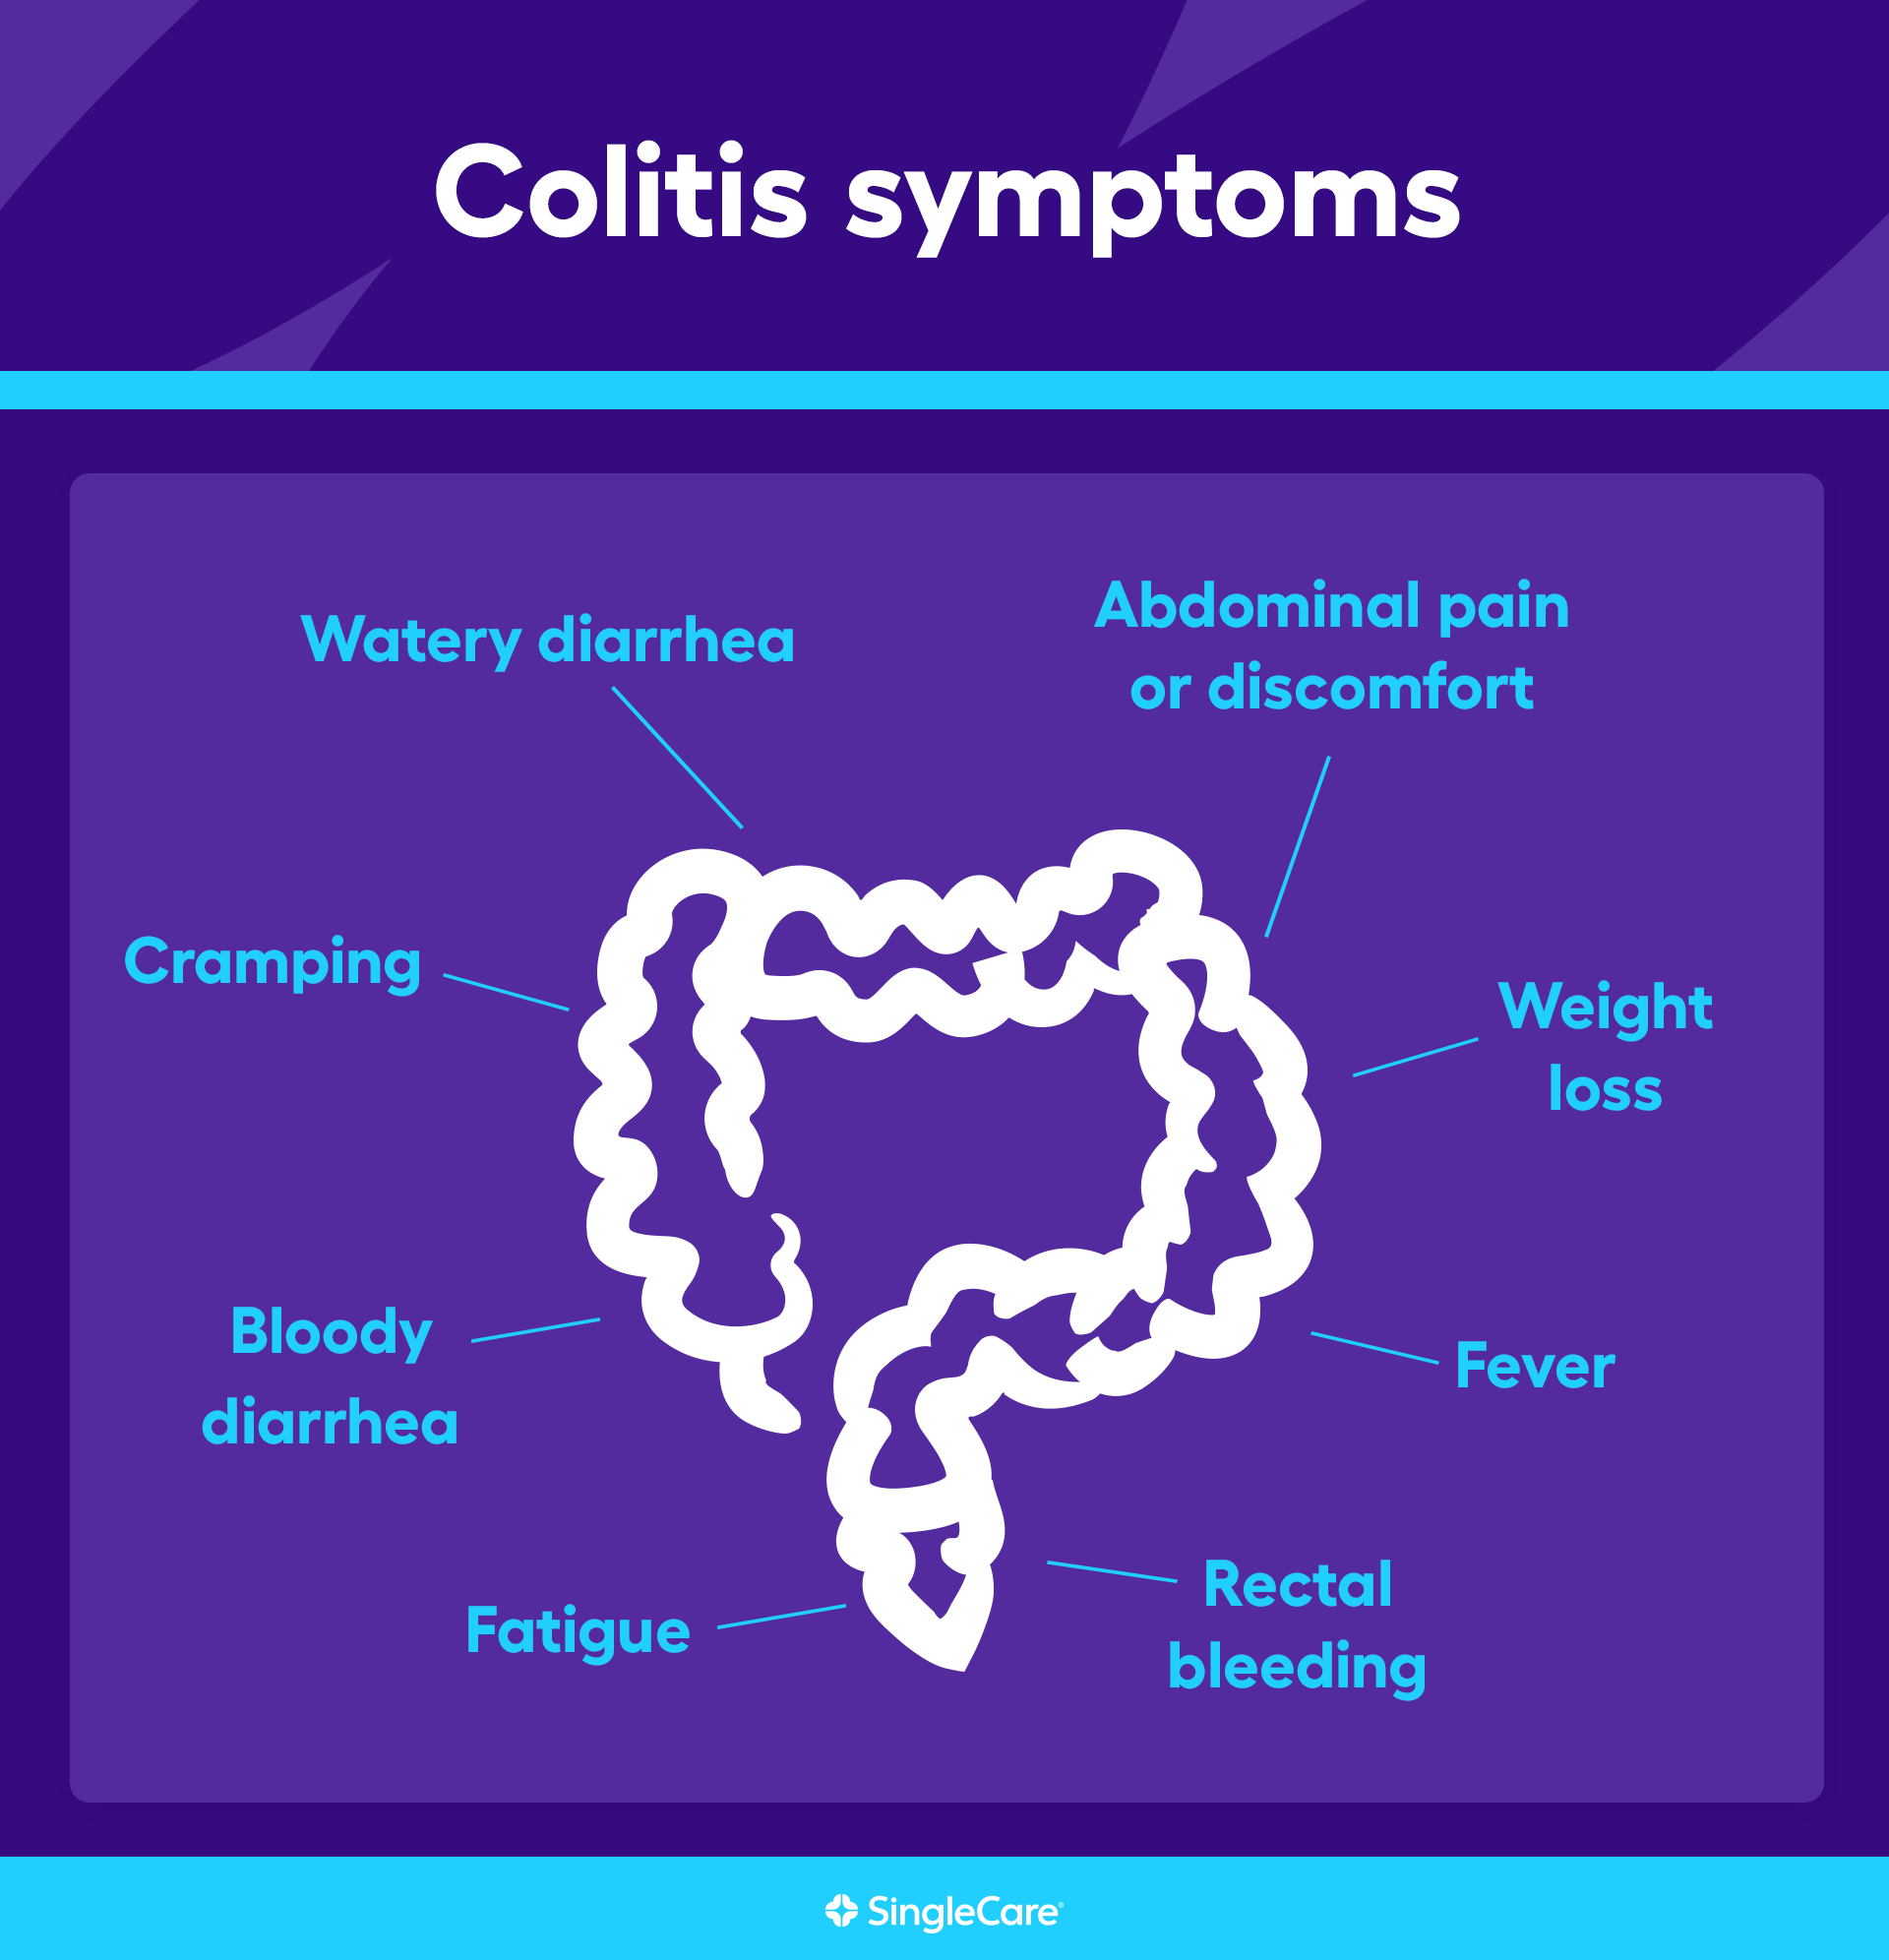 Symptoms of colitis